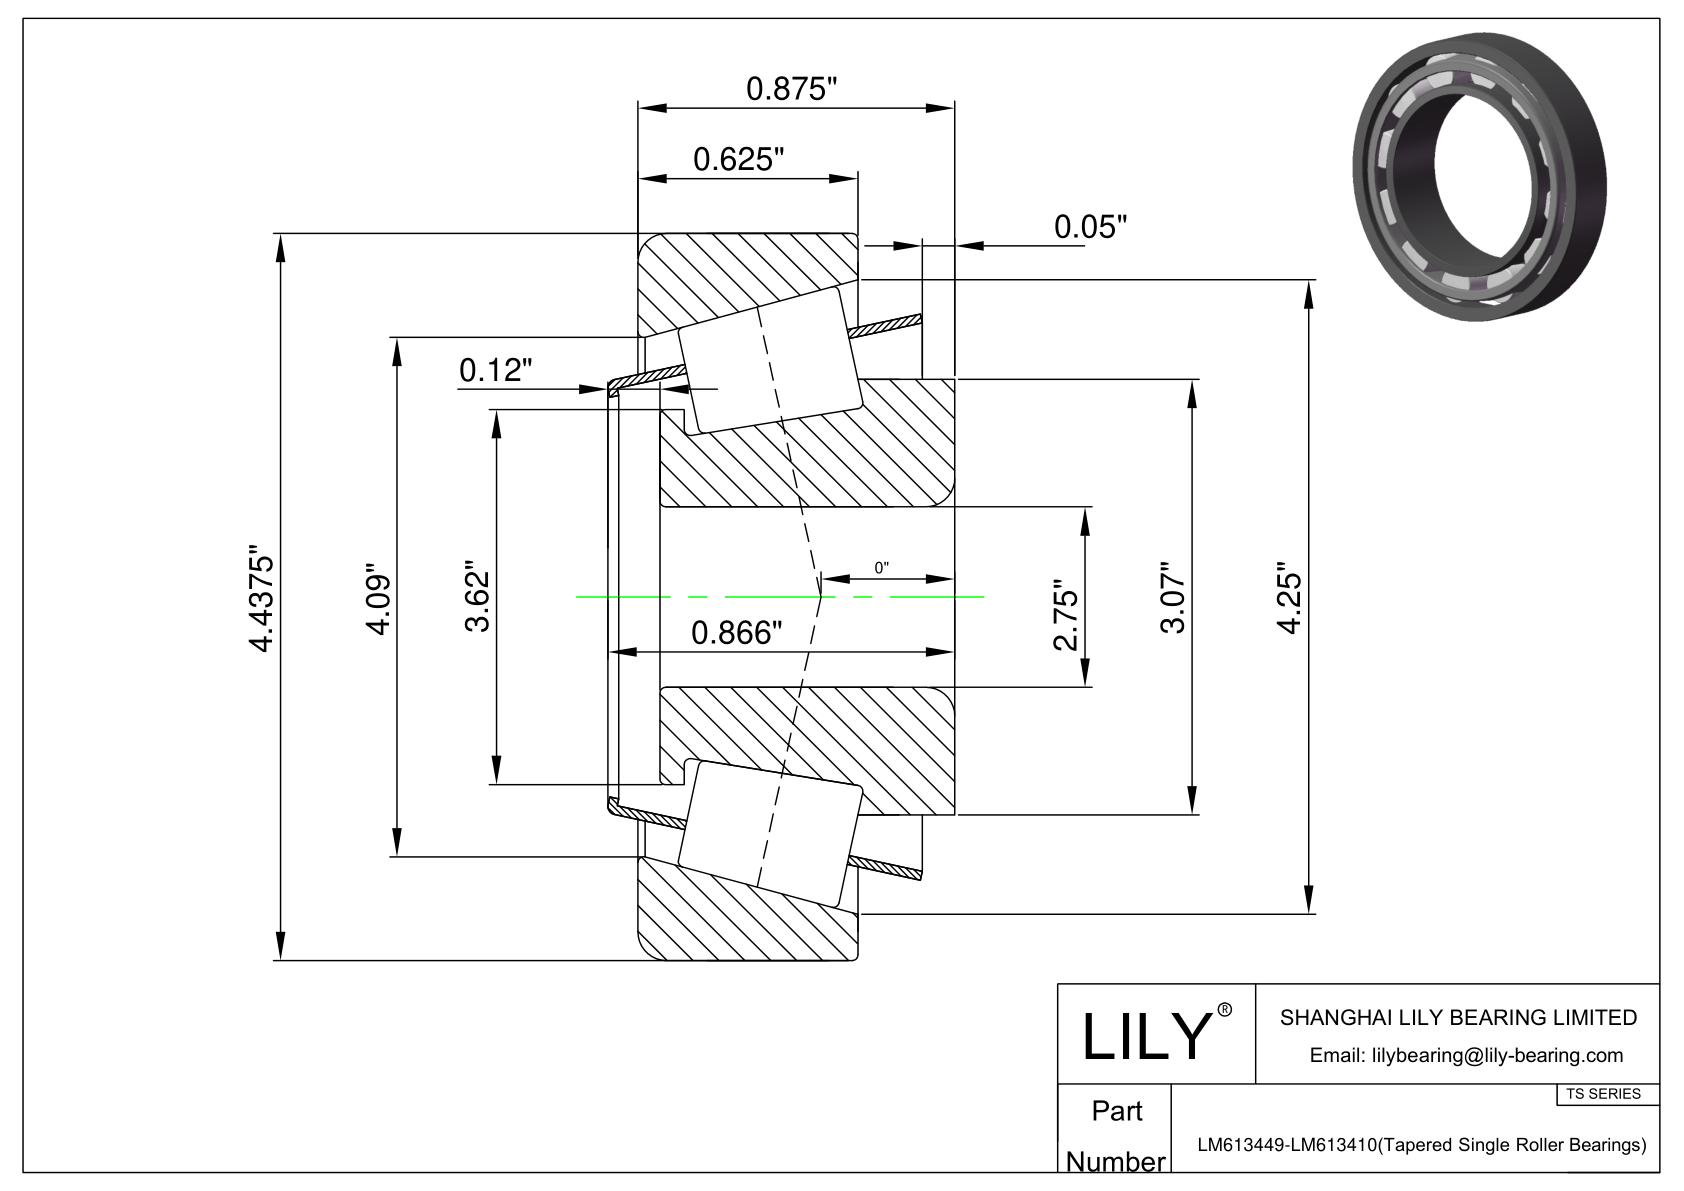 LM613449-LM613410 TS系列(圆锥单滚子轴承)(英制) CAD图形